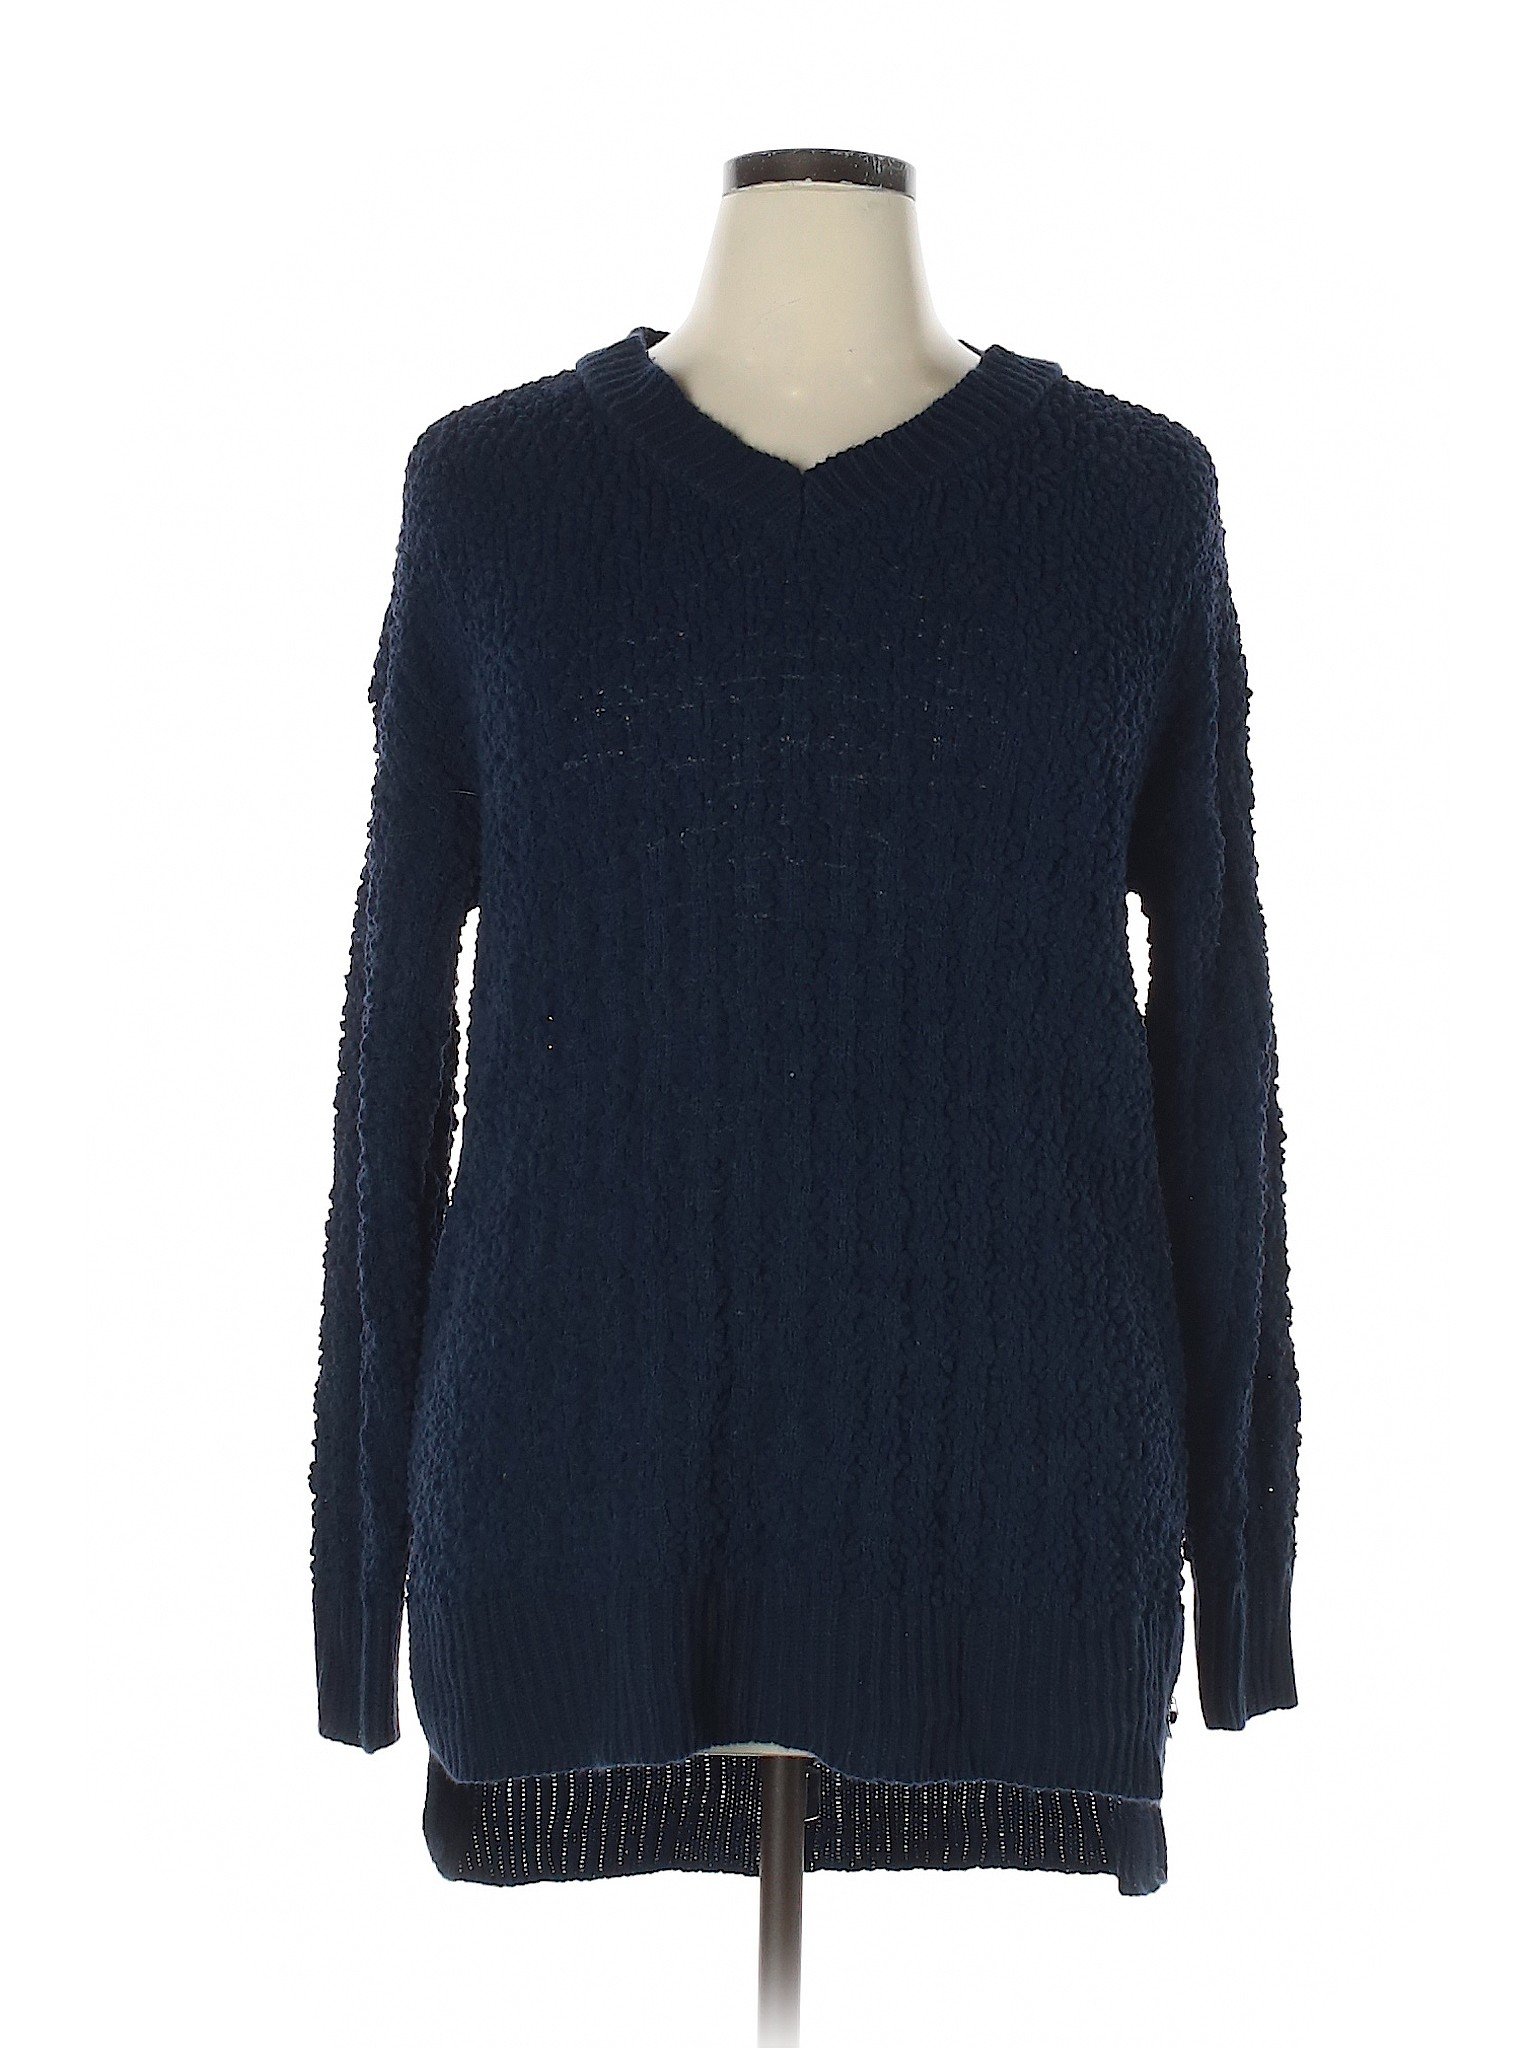 Zenana Premium Women Blue Pullover Sweater XL | eBay